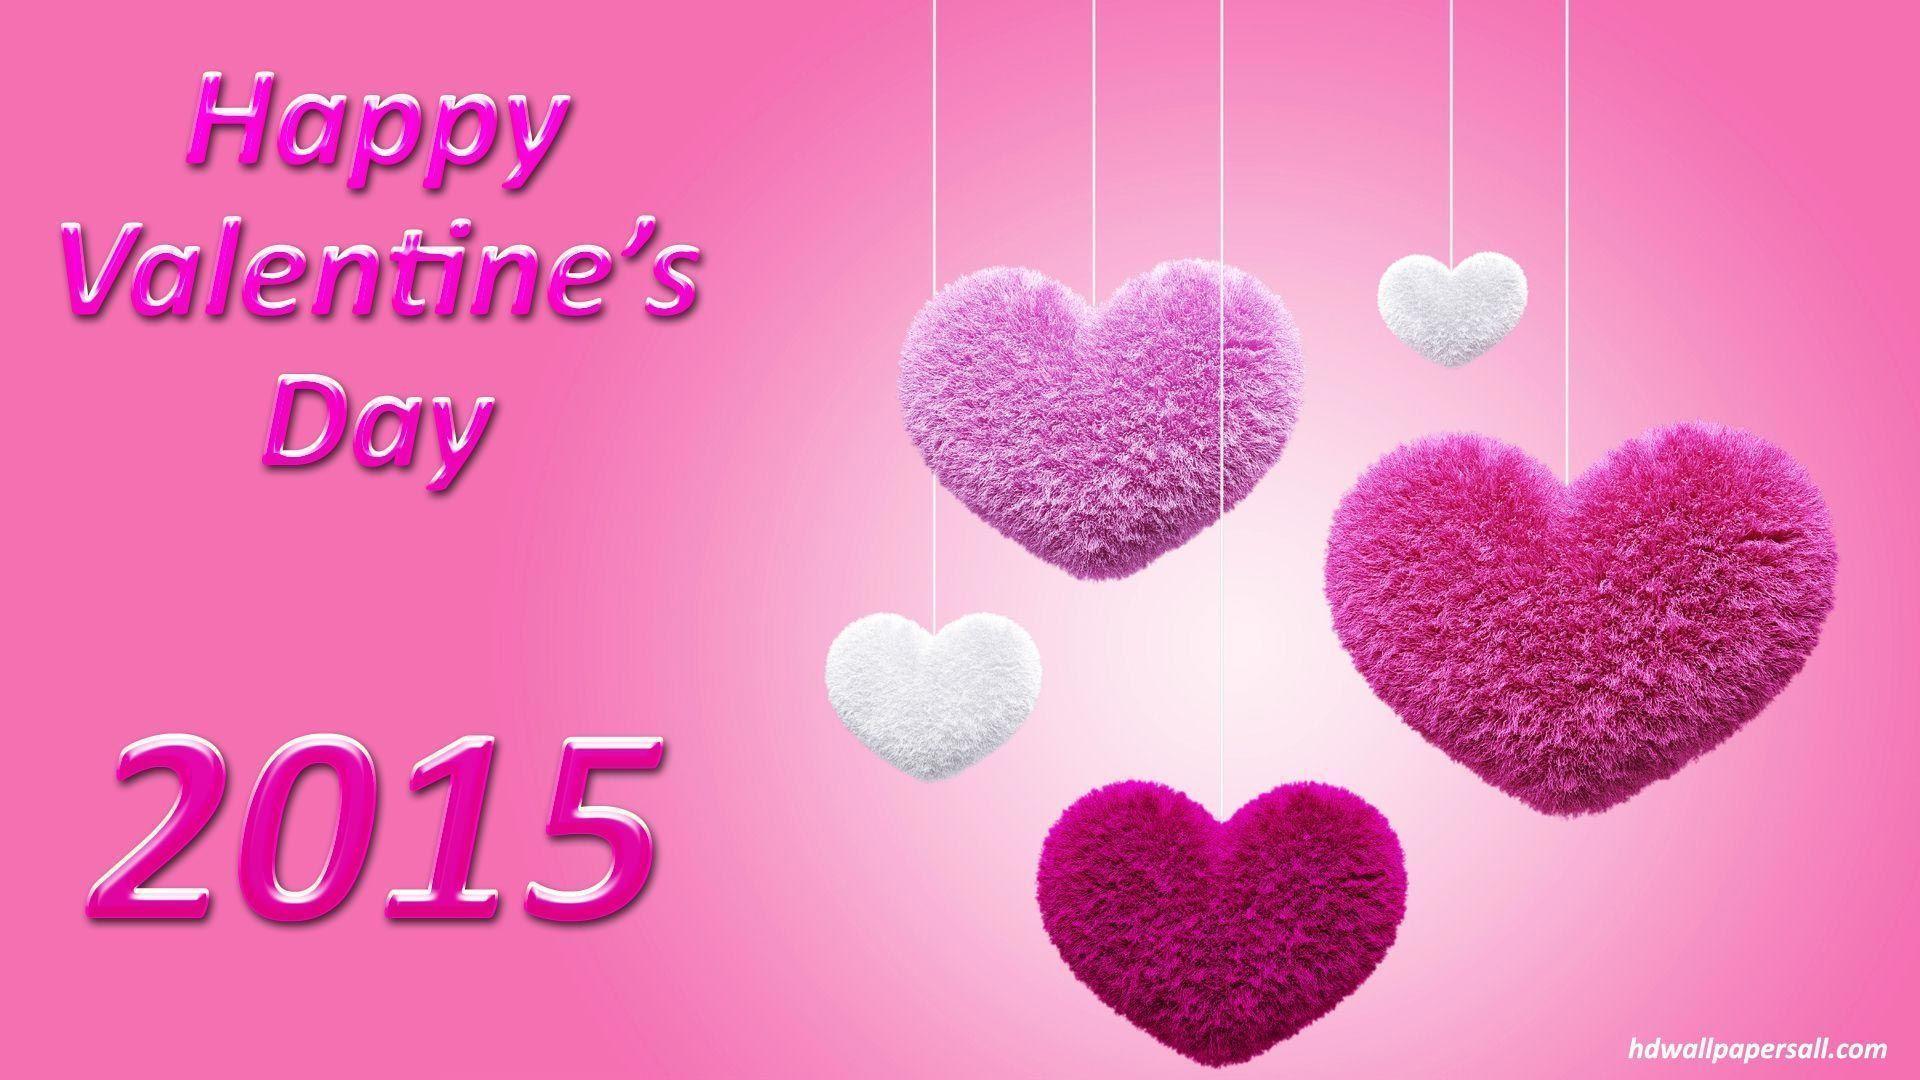 feb valentines day 2015 HD wallpaper 1080p 1920X1080 free download